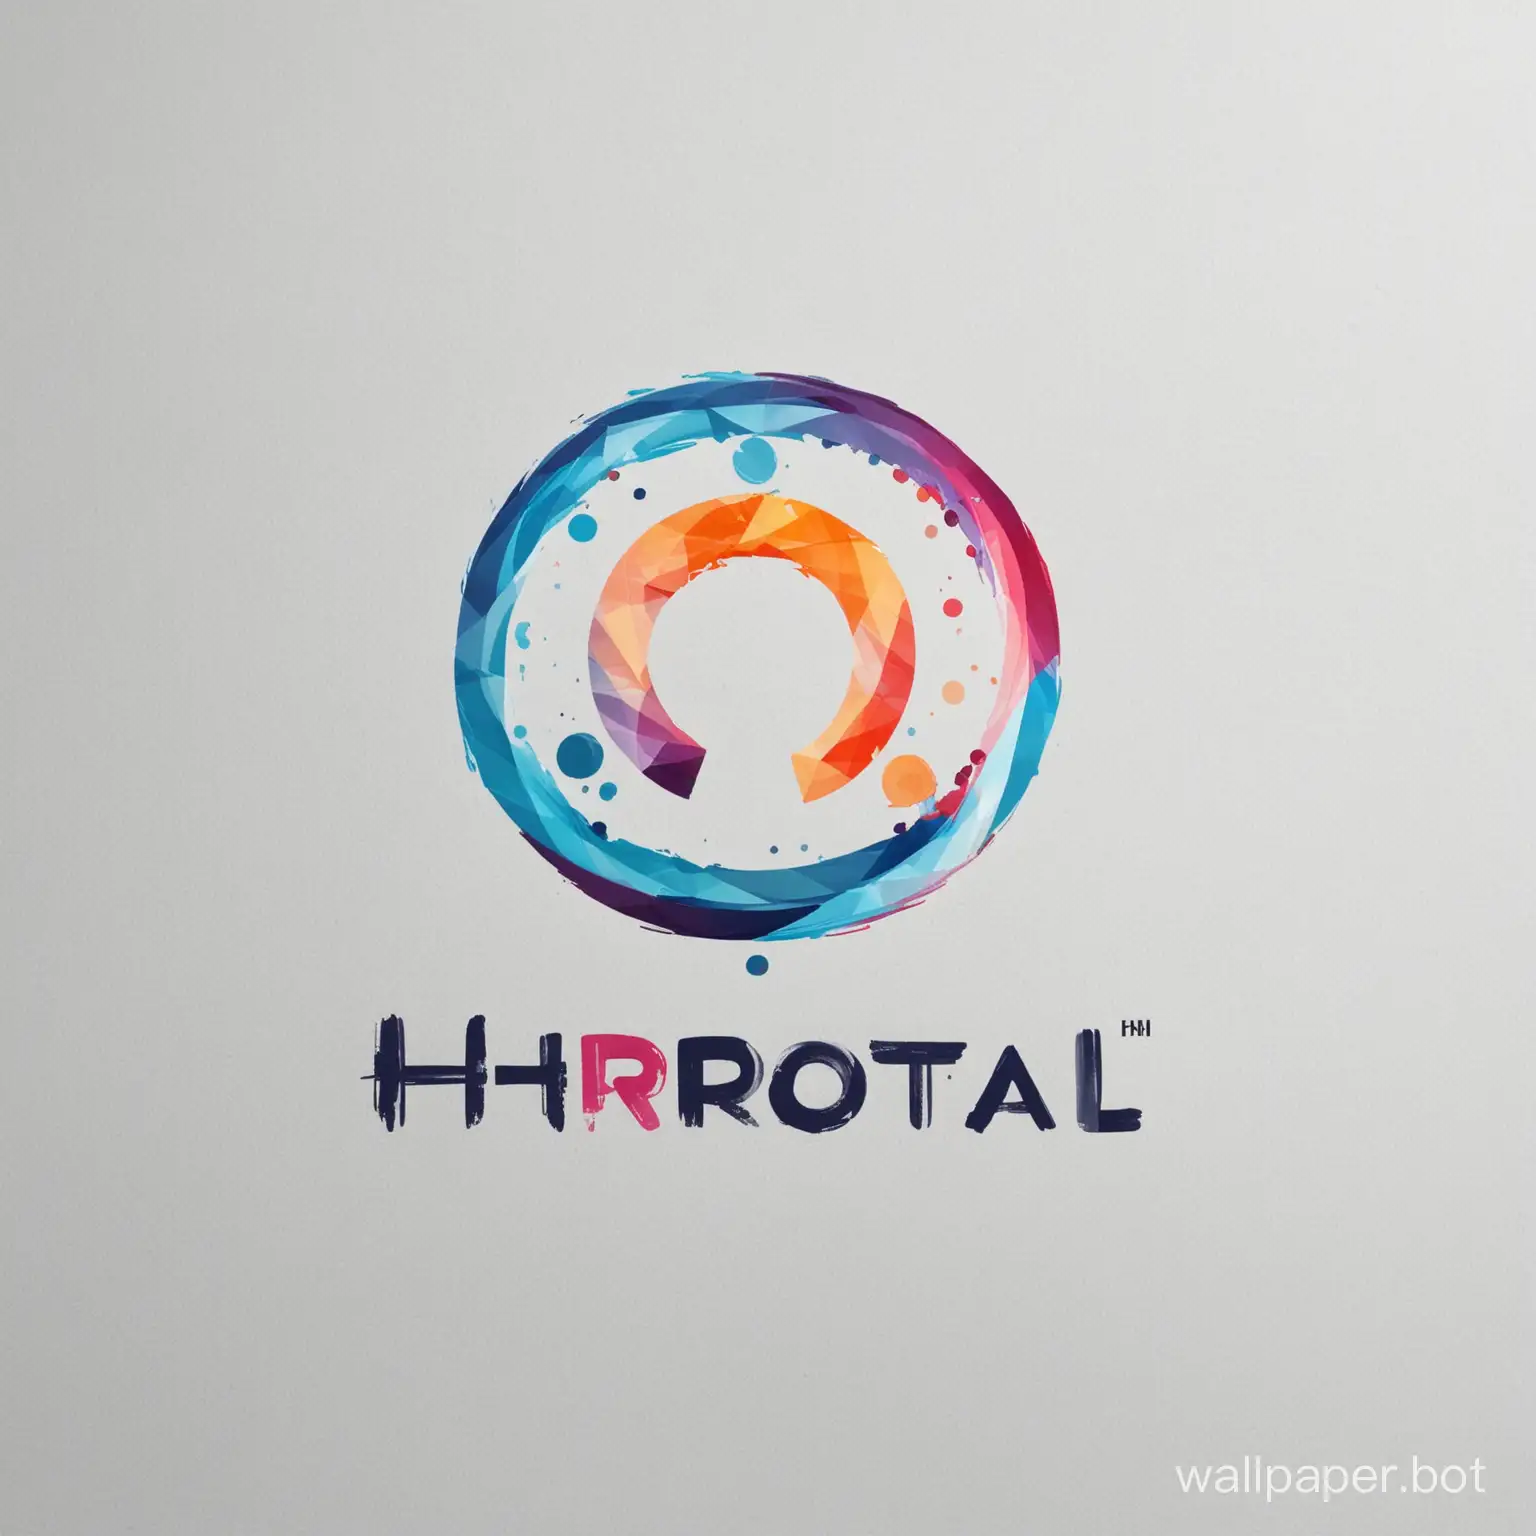 Professional-HR-Services-Logo-Design-HRPortal-Emblem